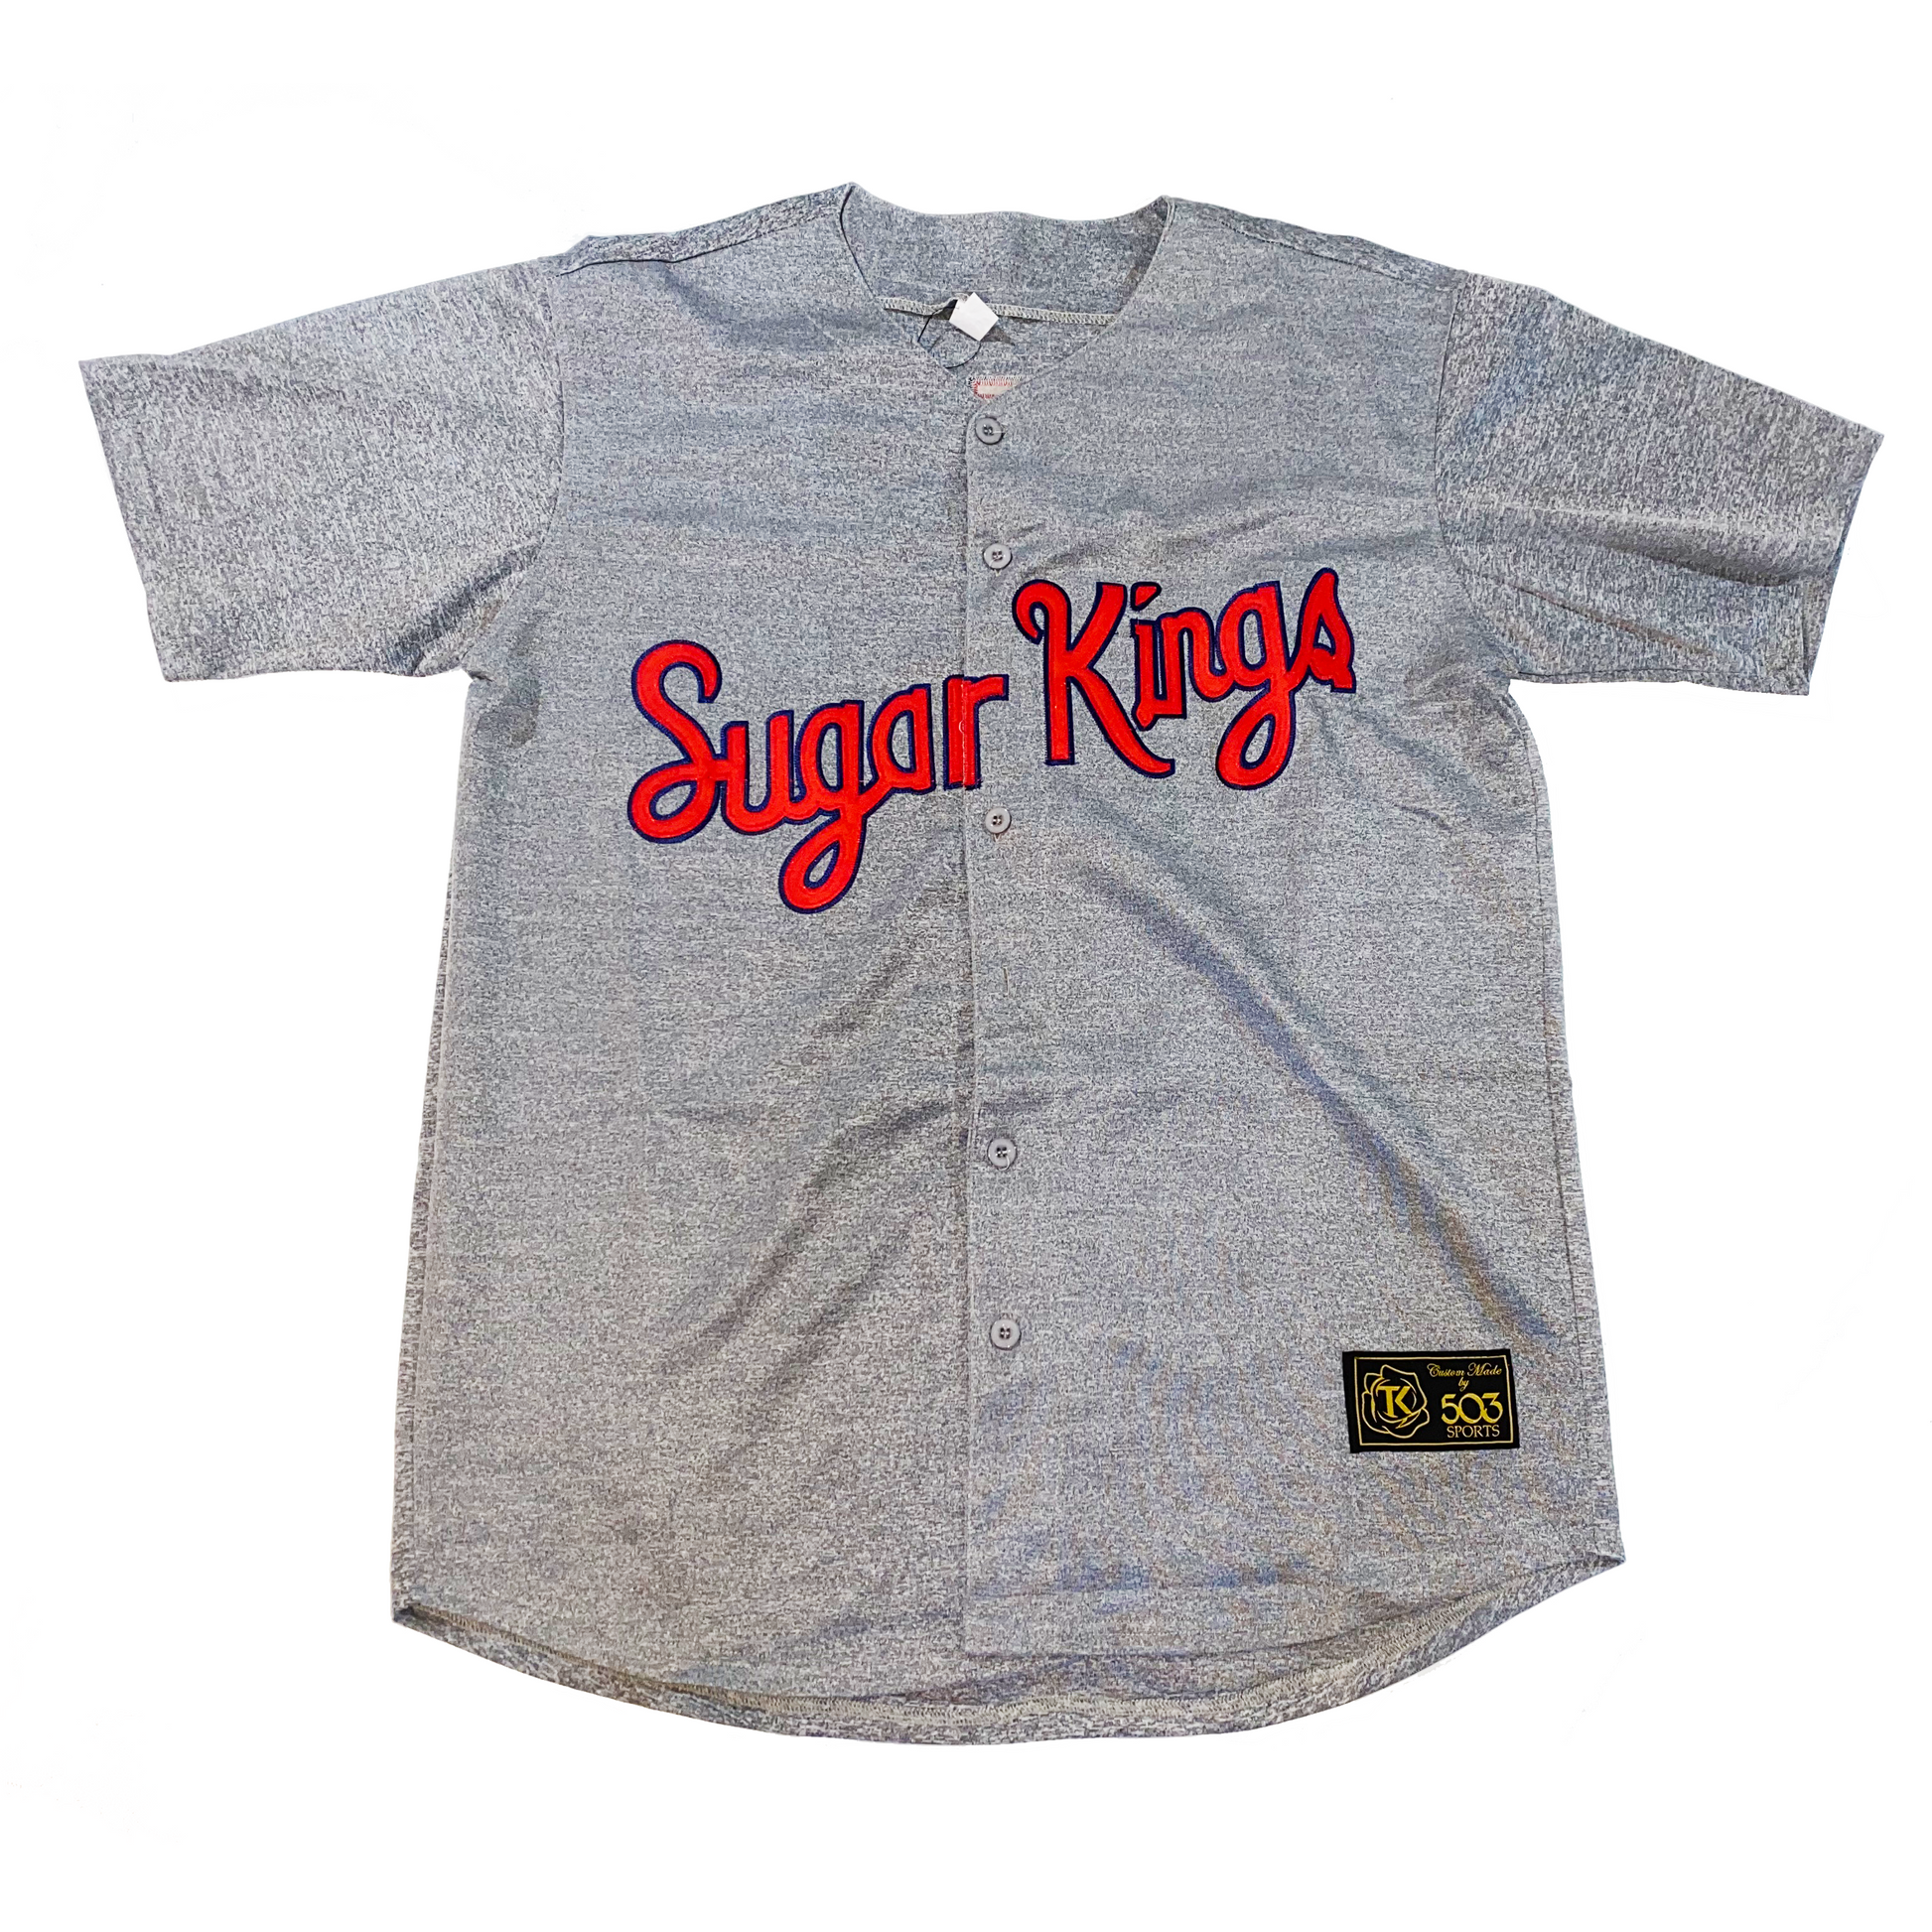 havana sugar kings uniforms